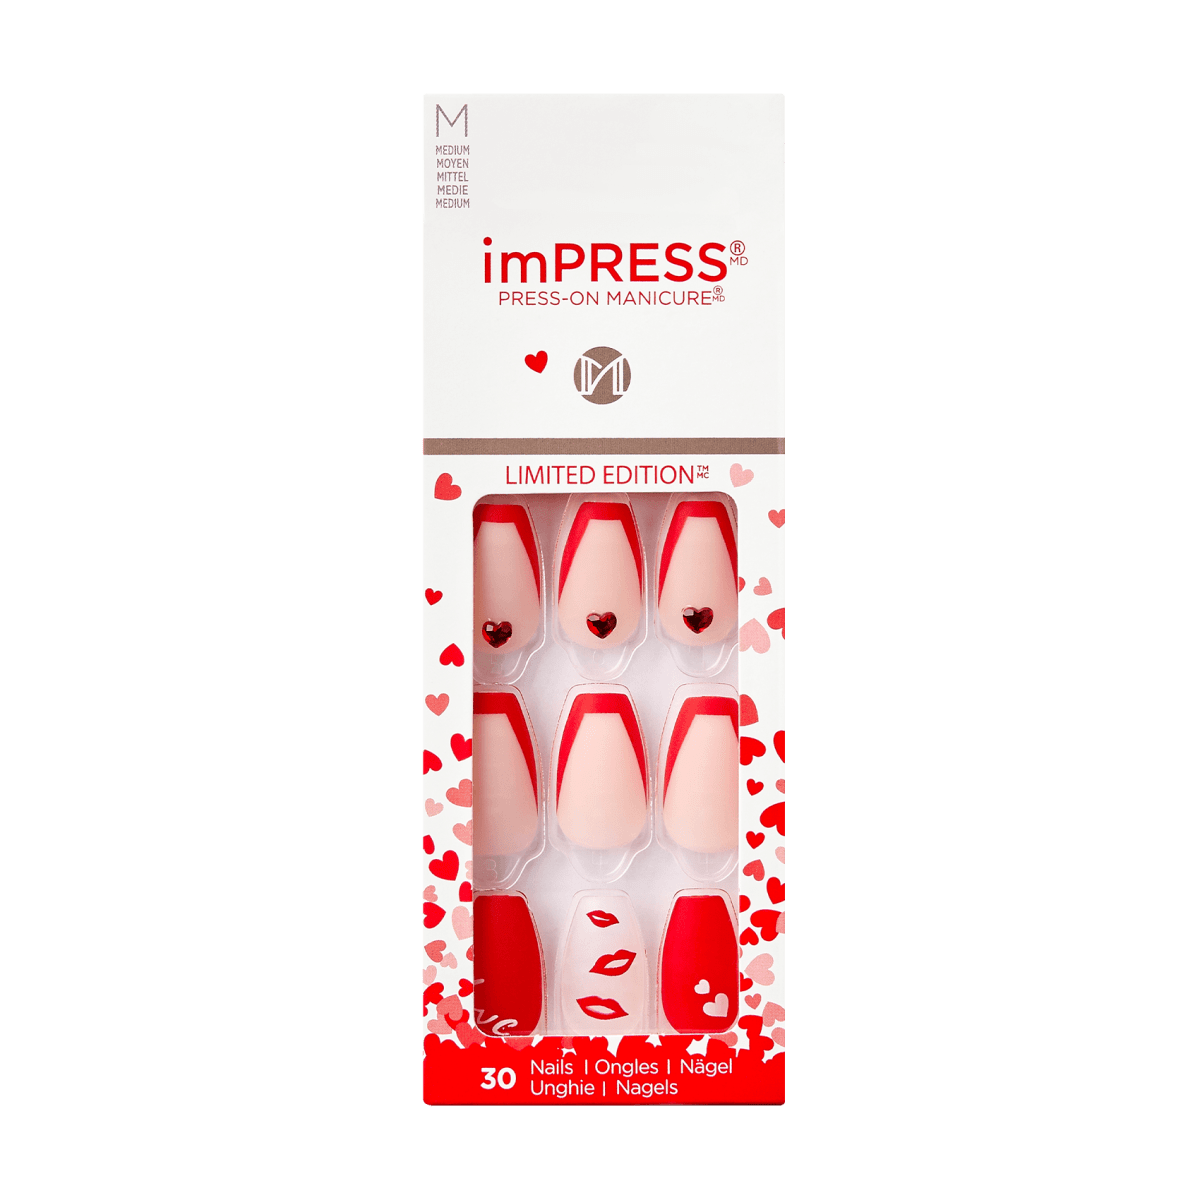 imPRESS Press-On Manicure - Favorite One